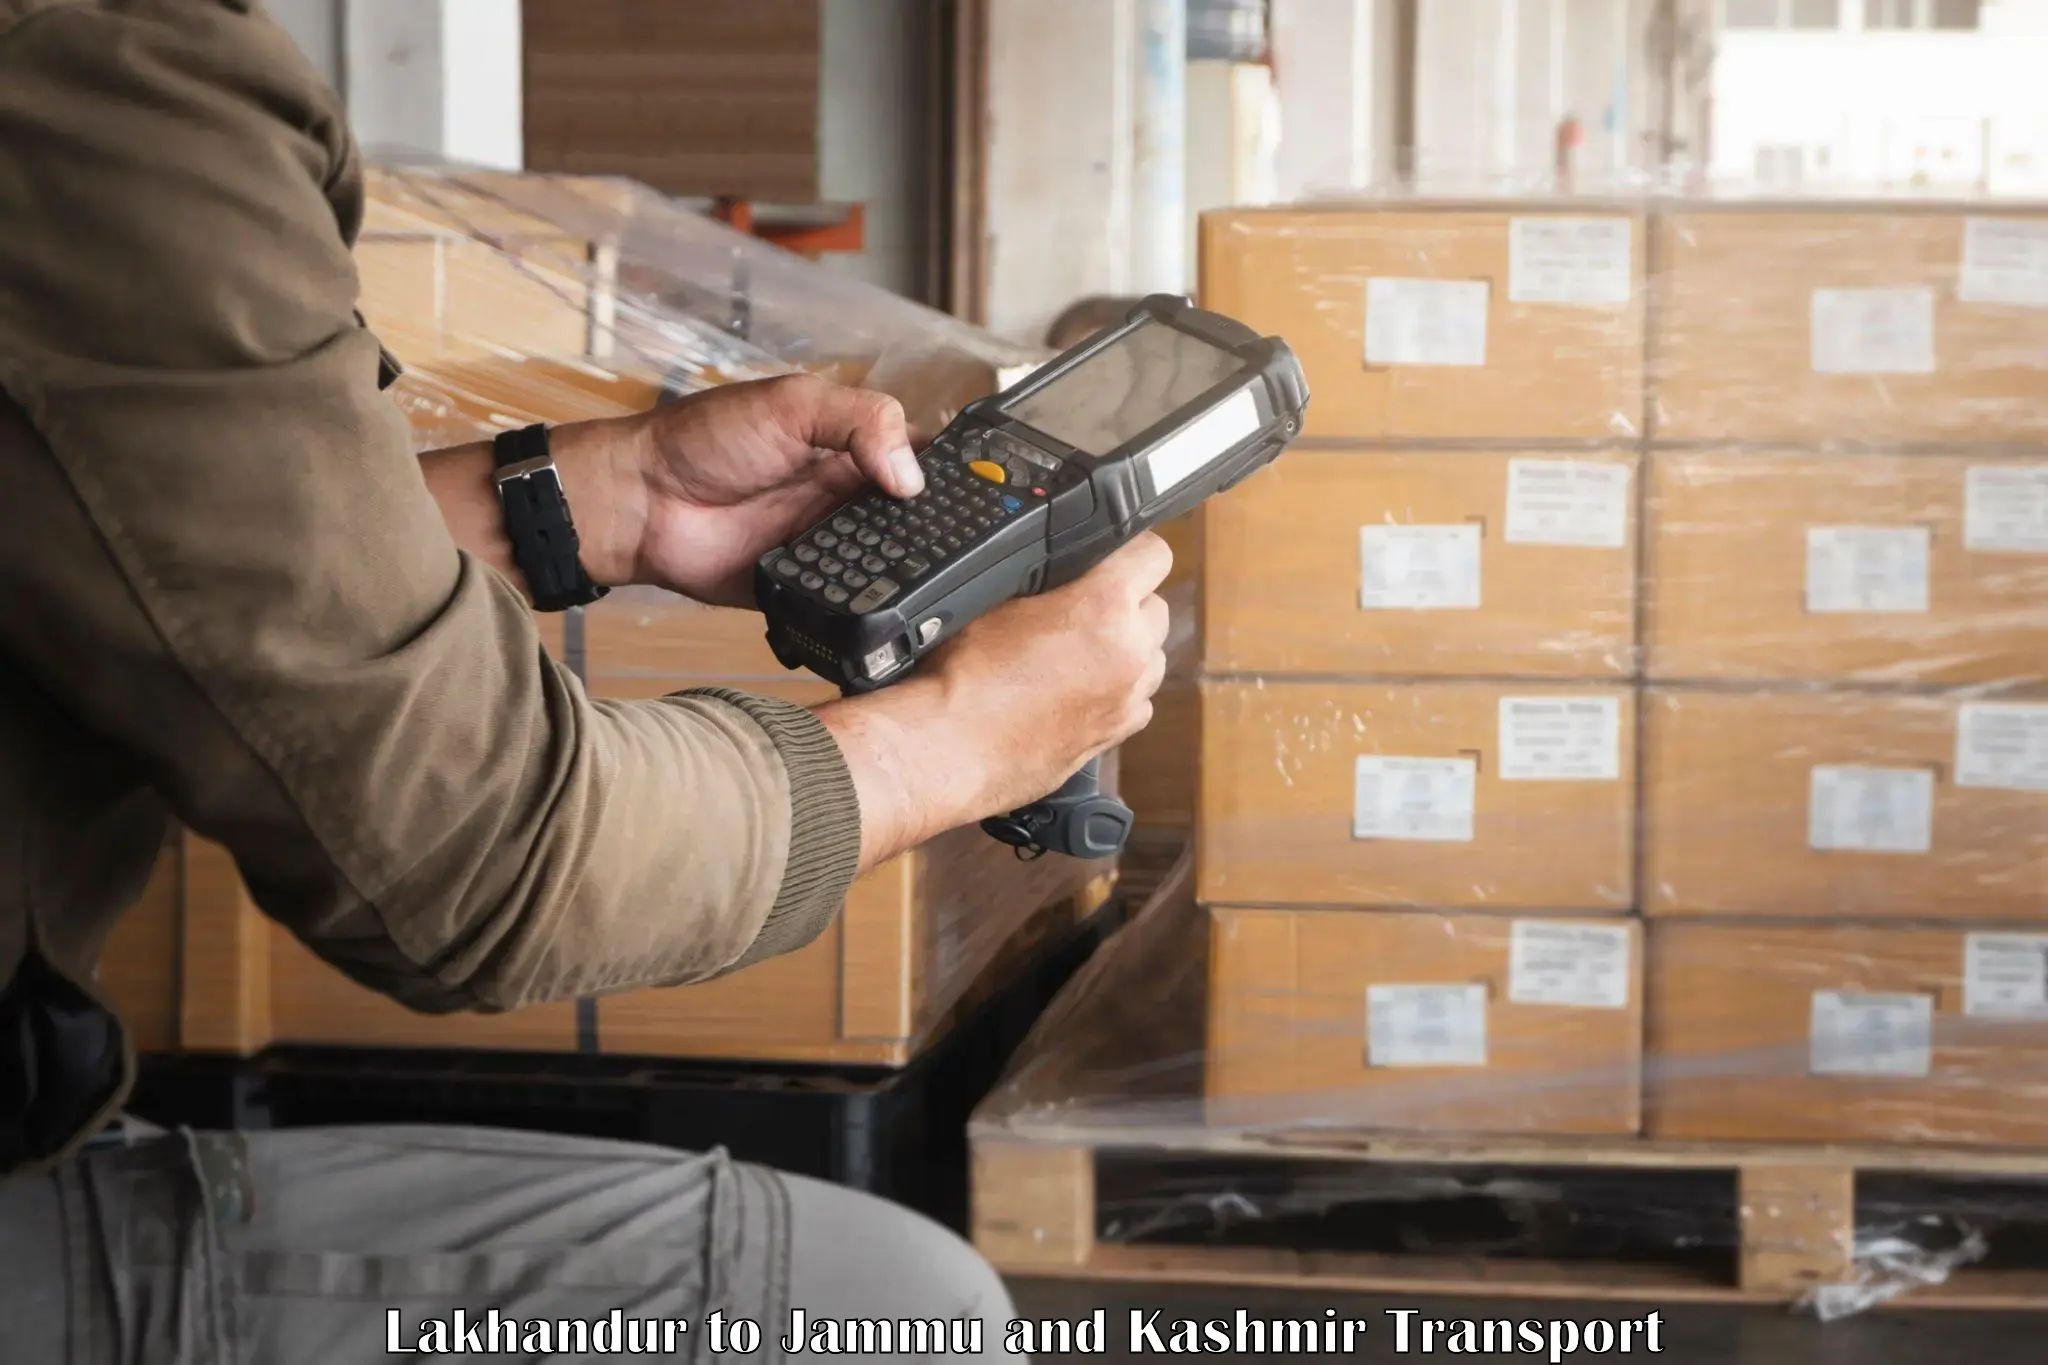 Container transport service Lakhandur to Kulgam